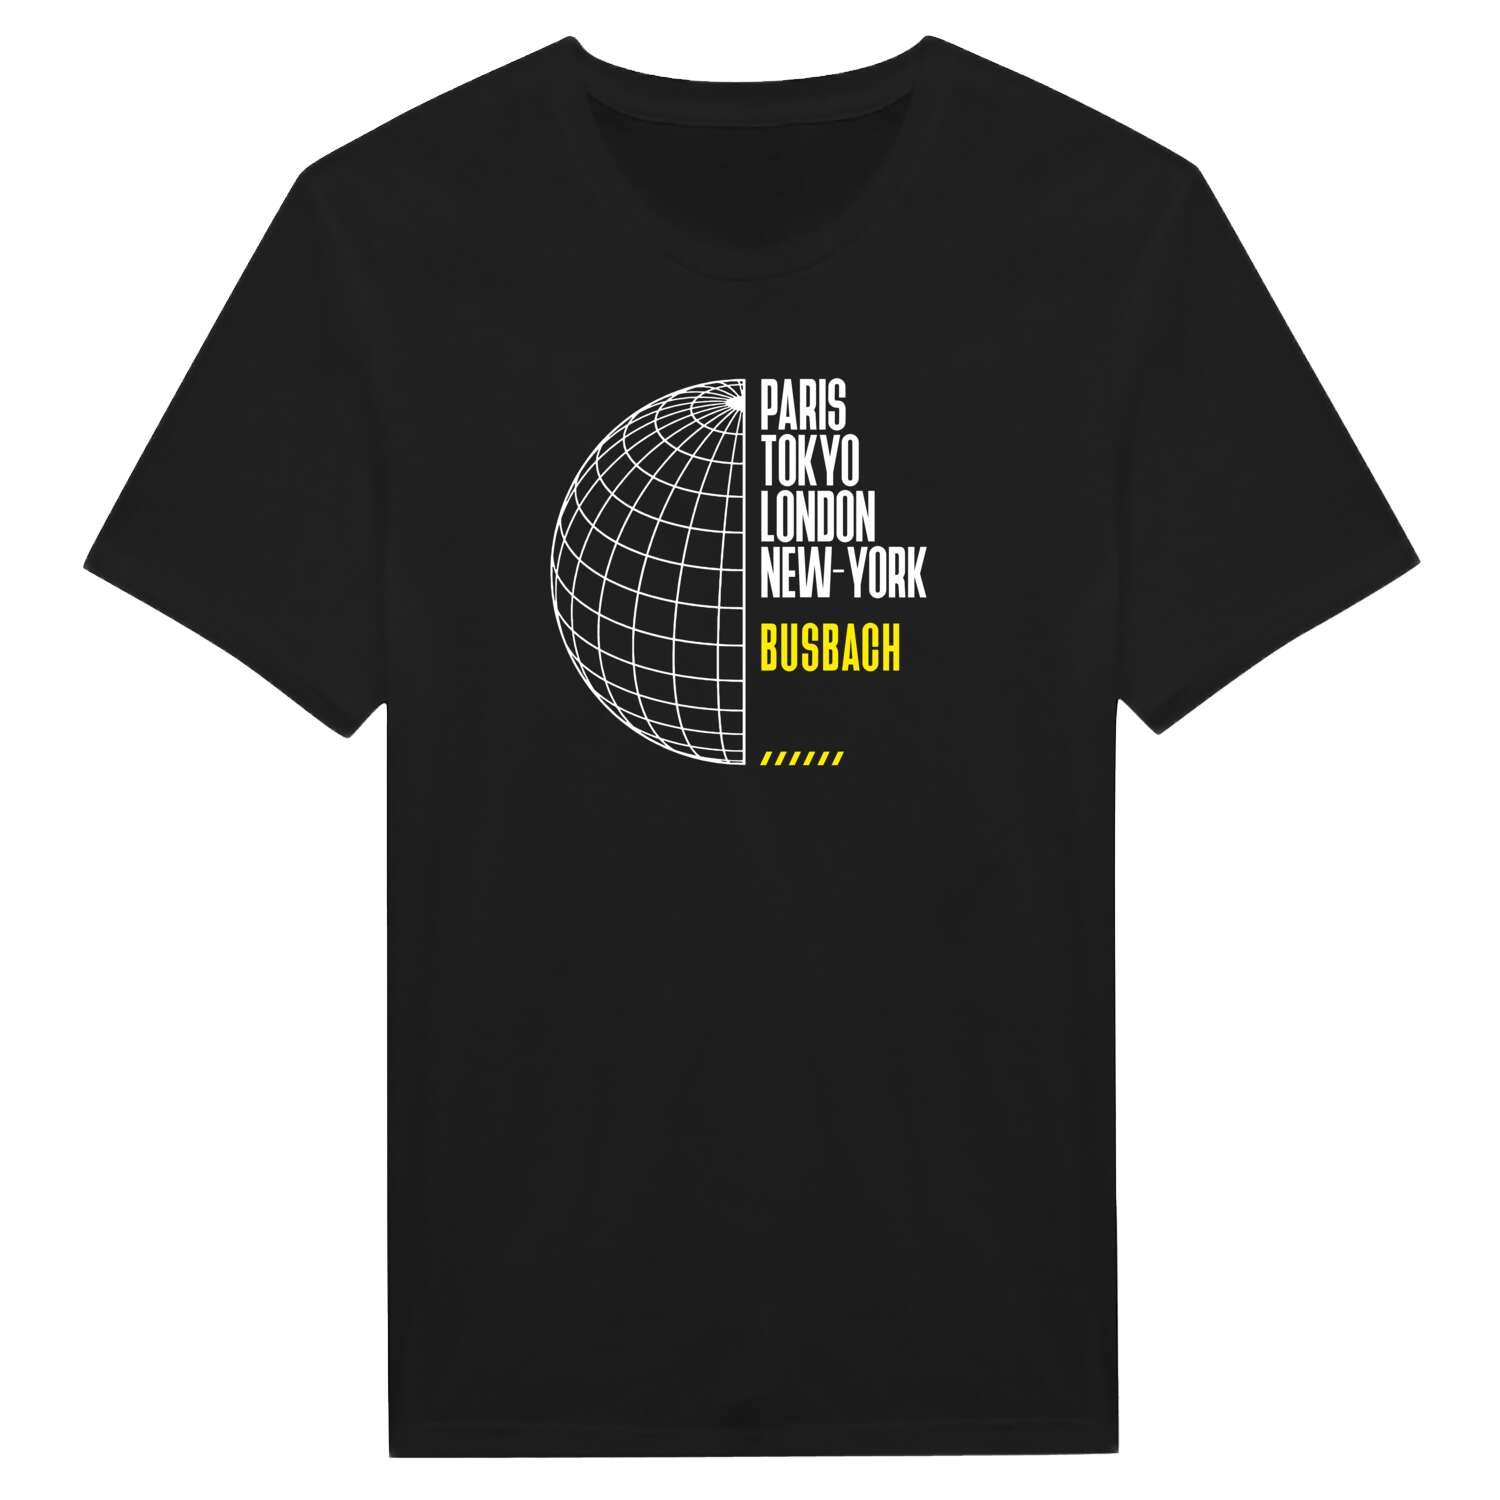 Busbach T-Shirt »Paris Tokyo London«